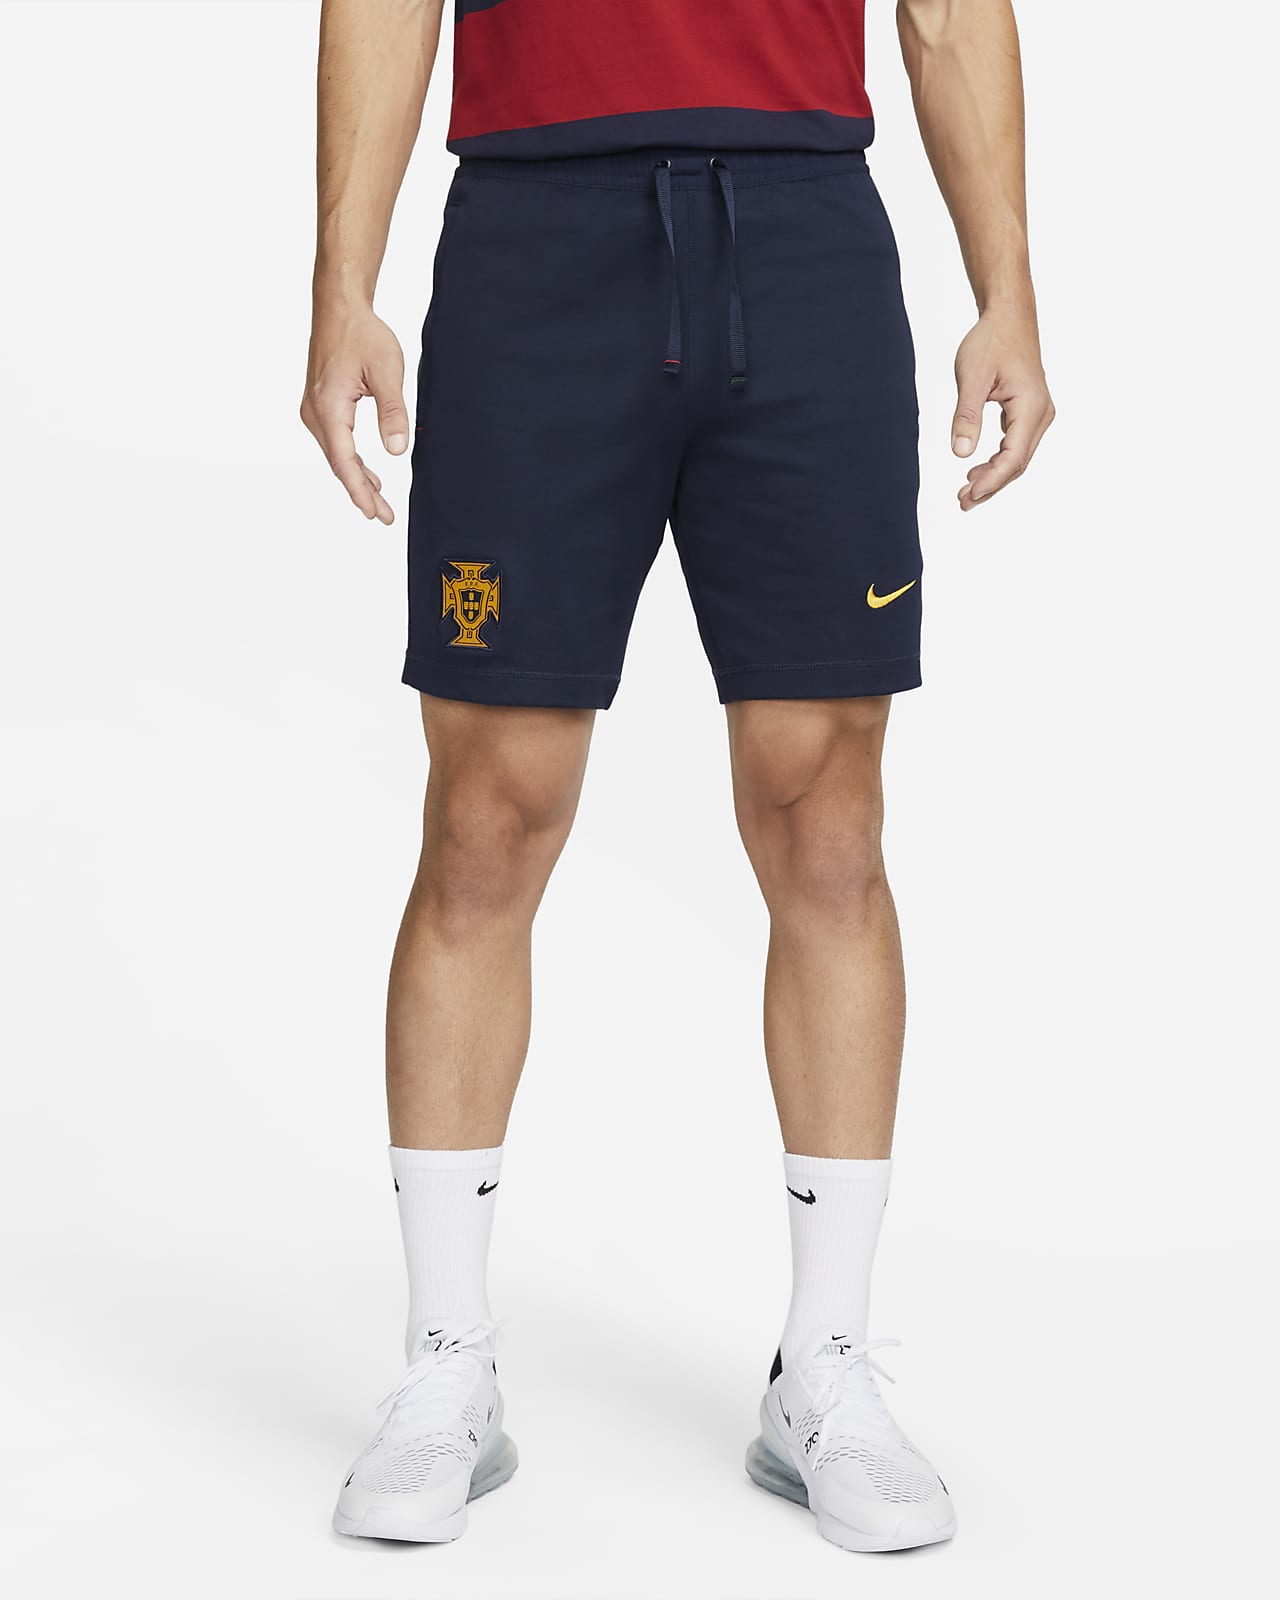 Portugal Men's Knit Football Shorts